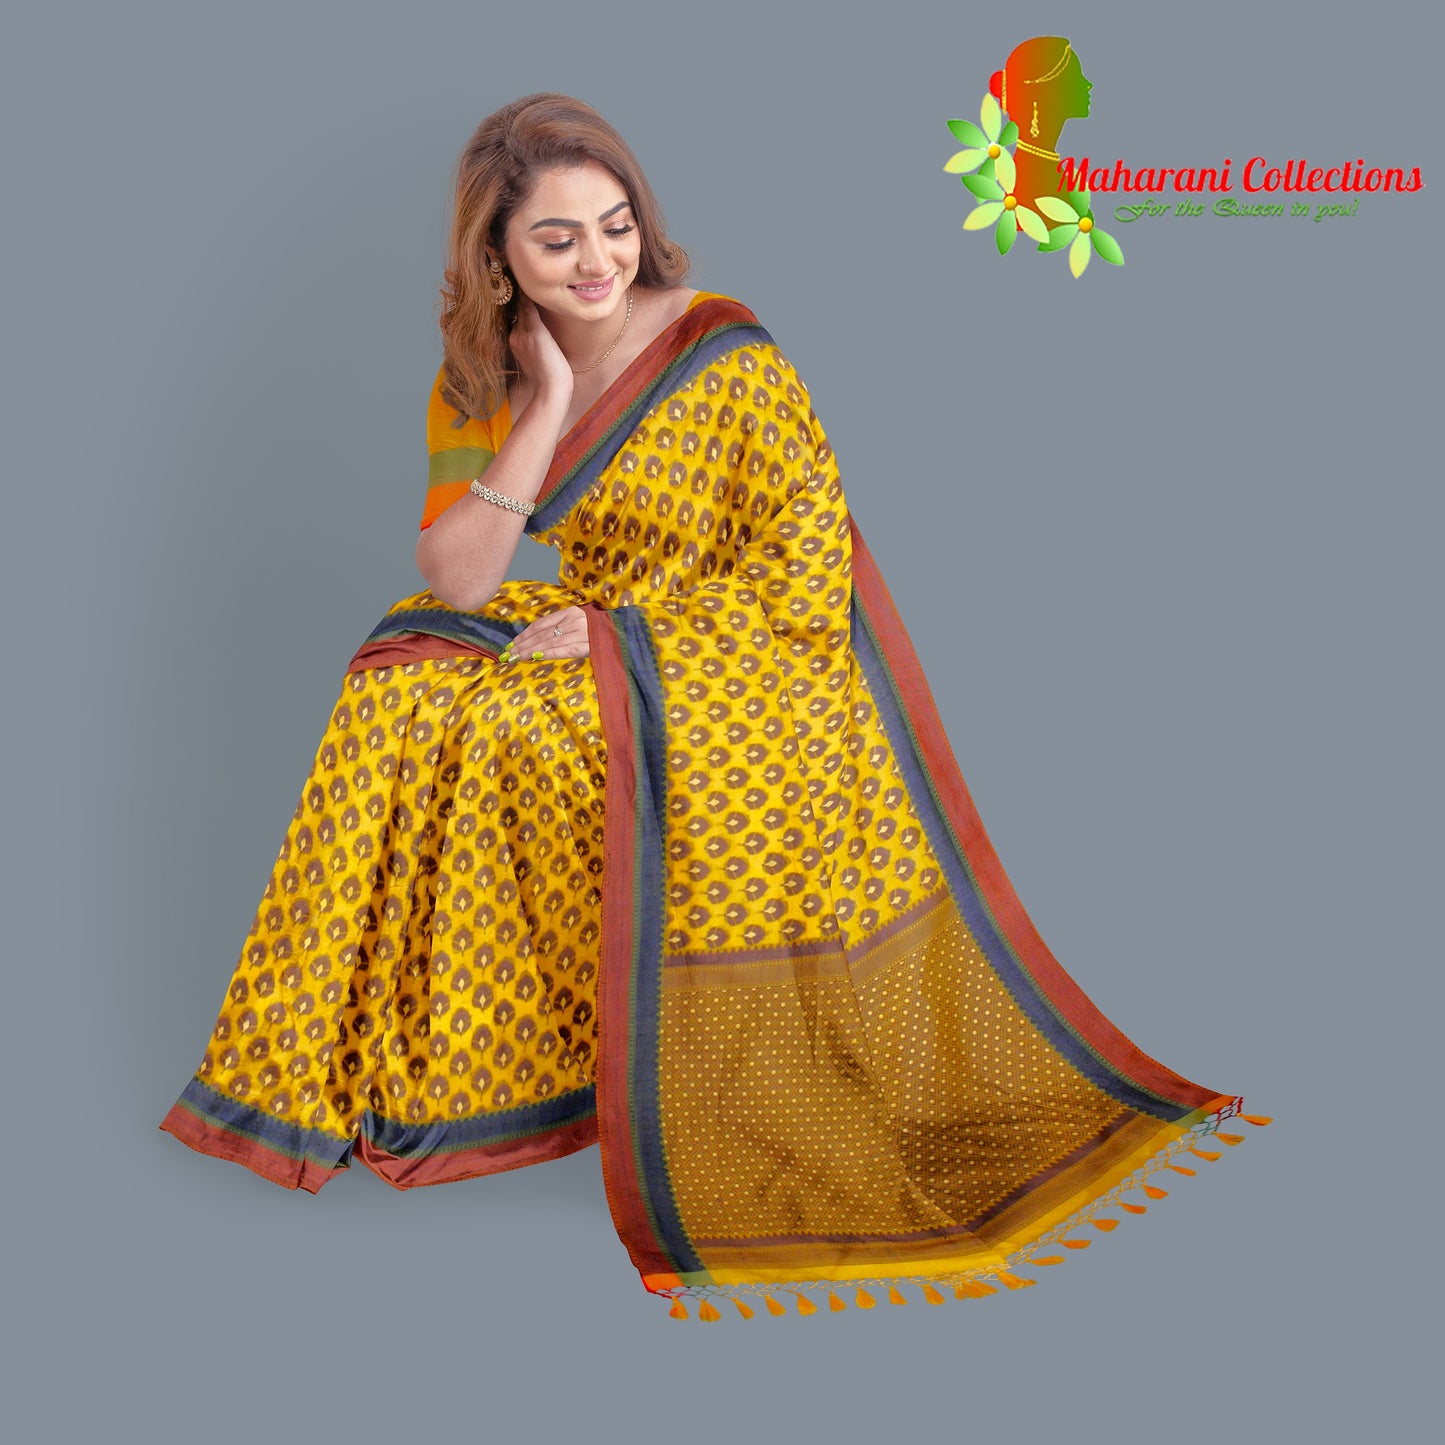 Maharani's Pure Banarasi Silk Saree - Mustard Yellow (with Stitched Blouse and Petticoat)